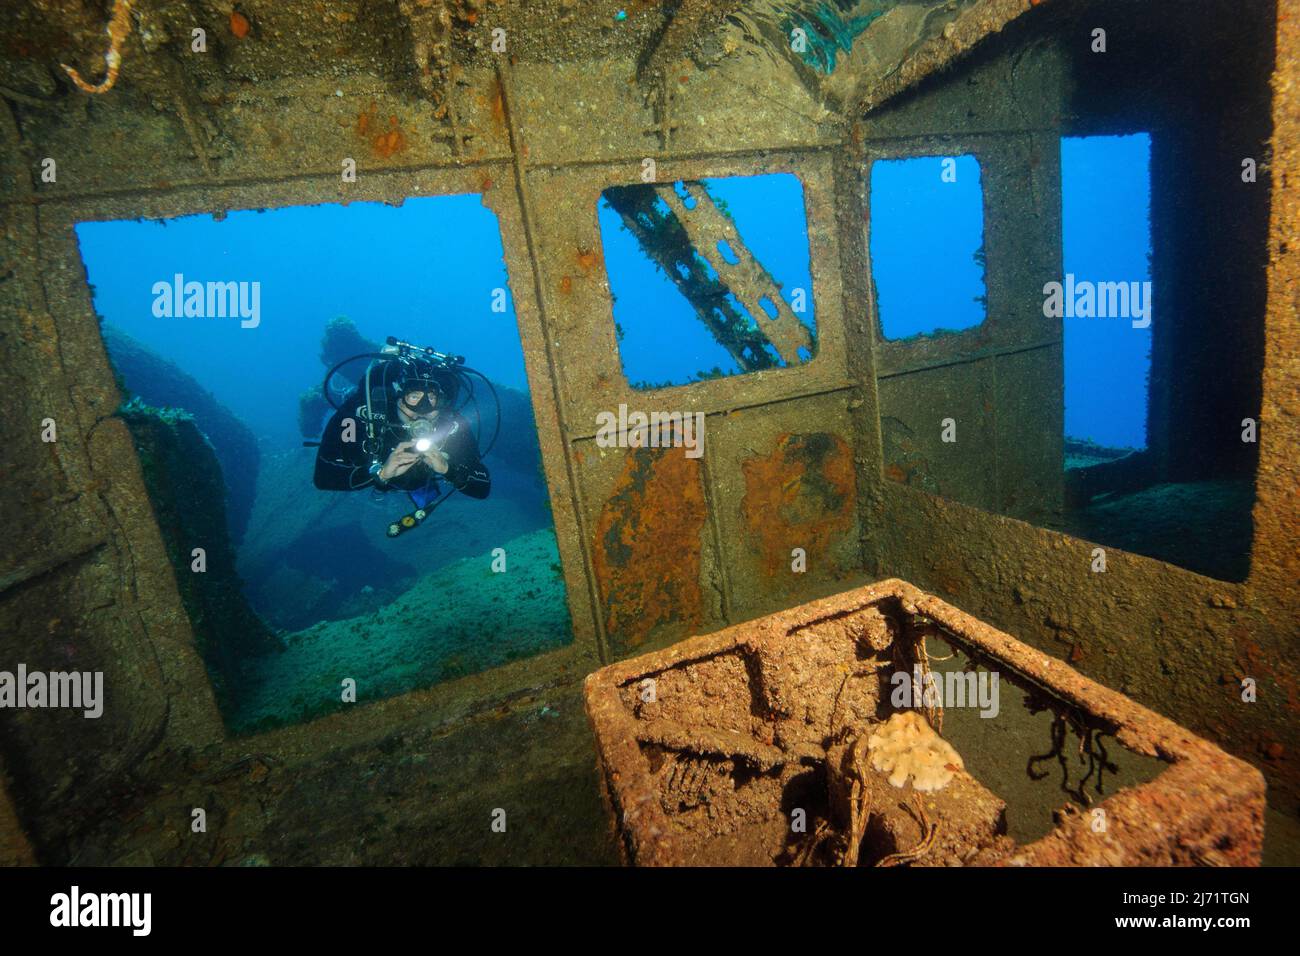 Taucher blickt in Schiffswrack, Mittelmeer, Santa Teresa di Gallura, Sardinien, Italien Stock Photo